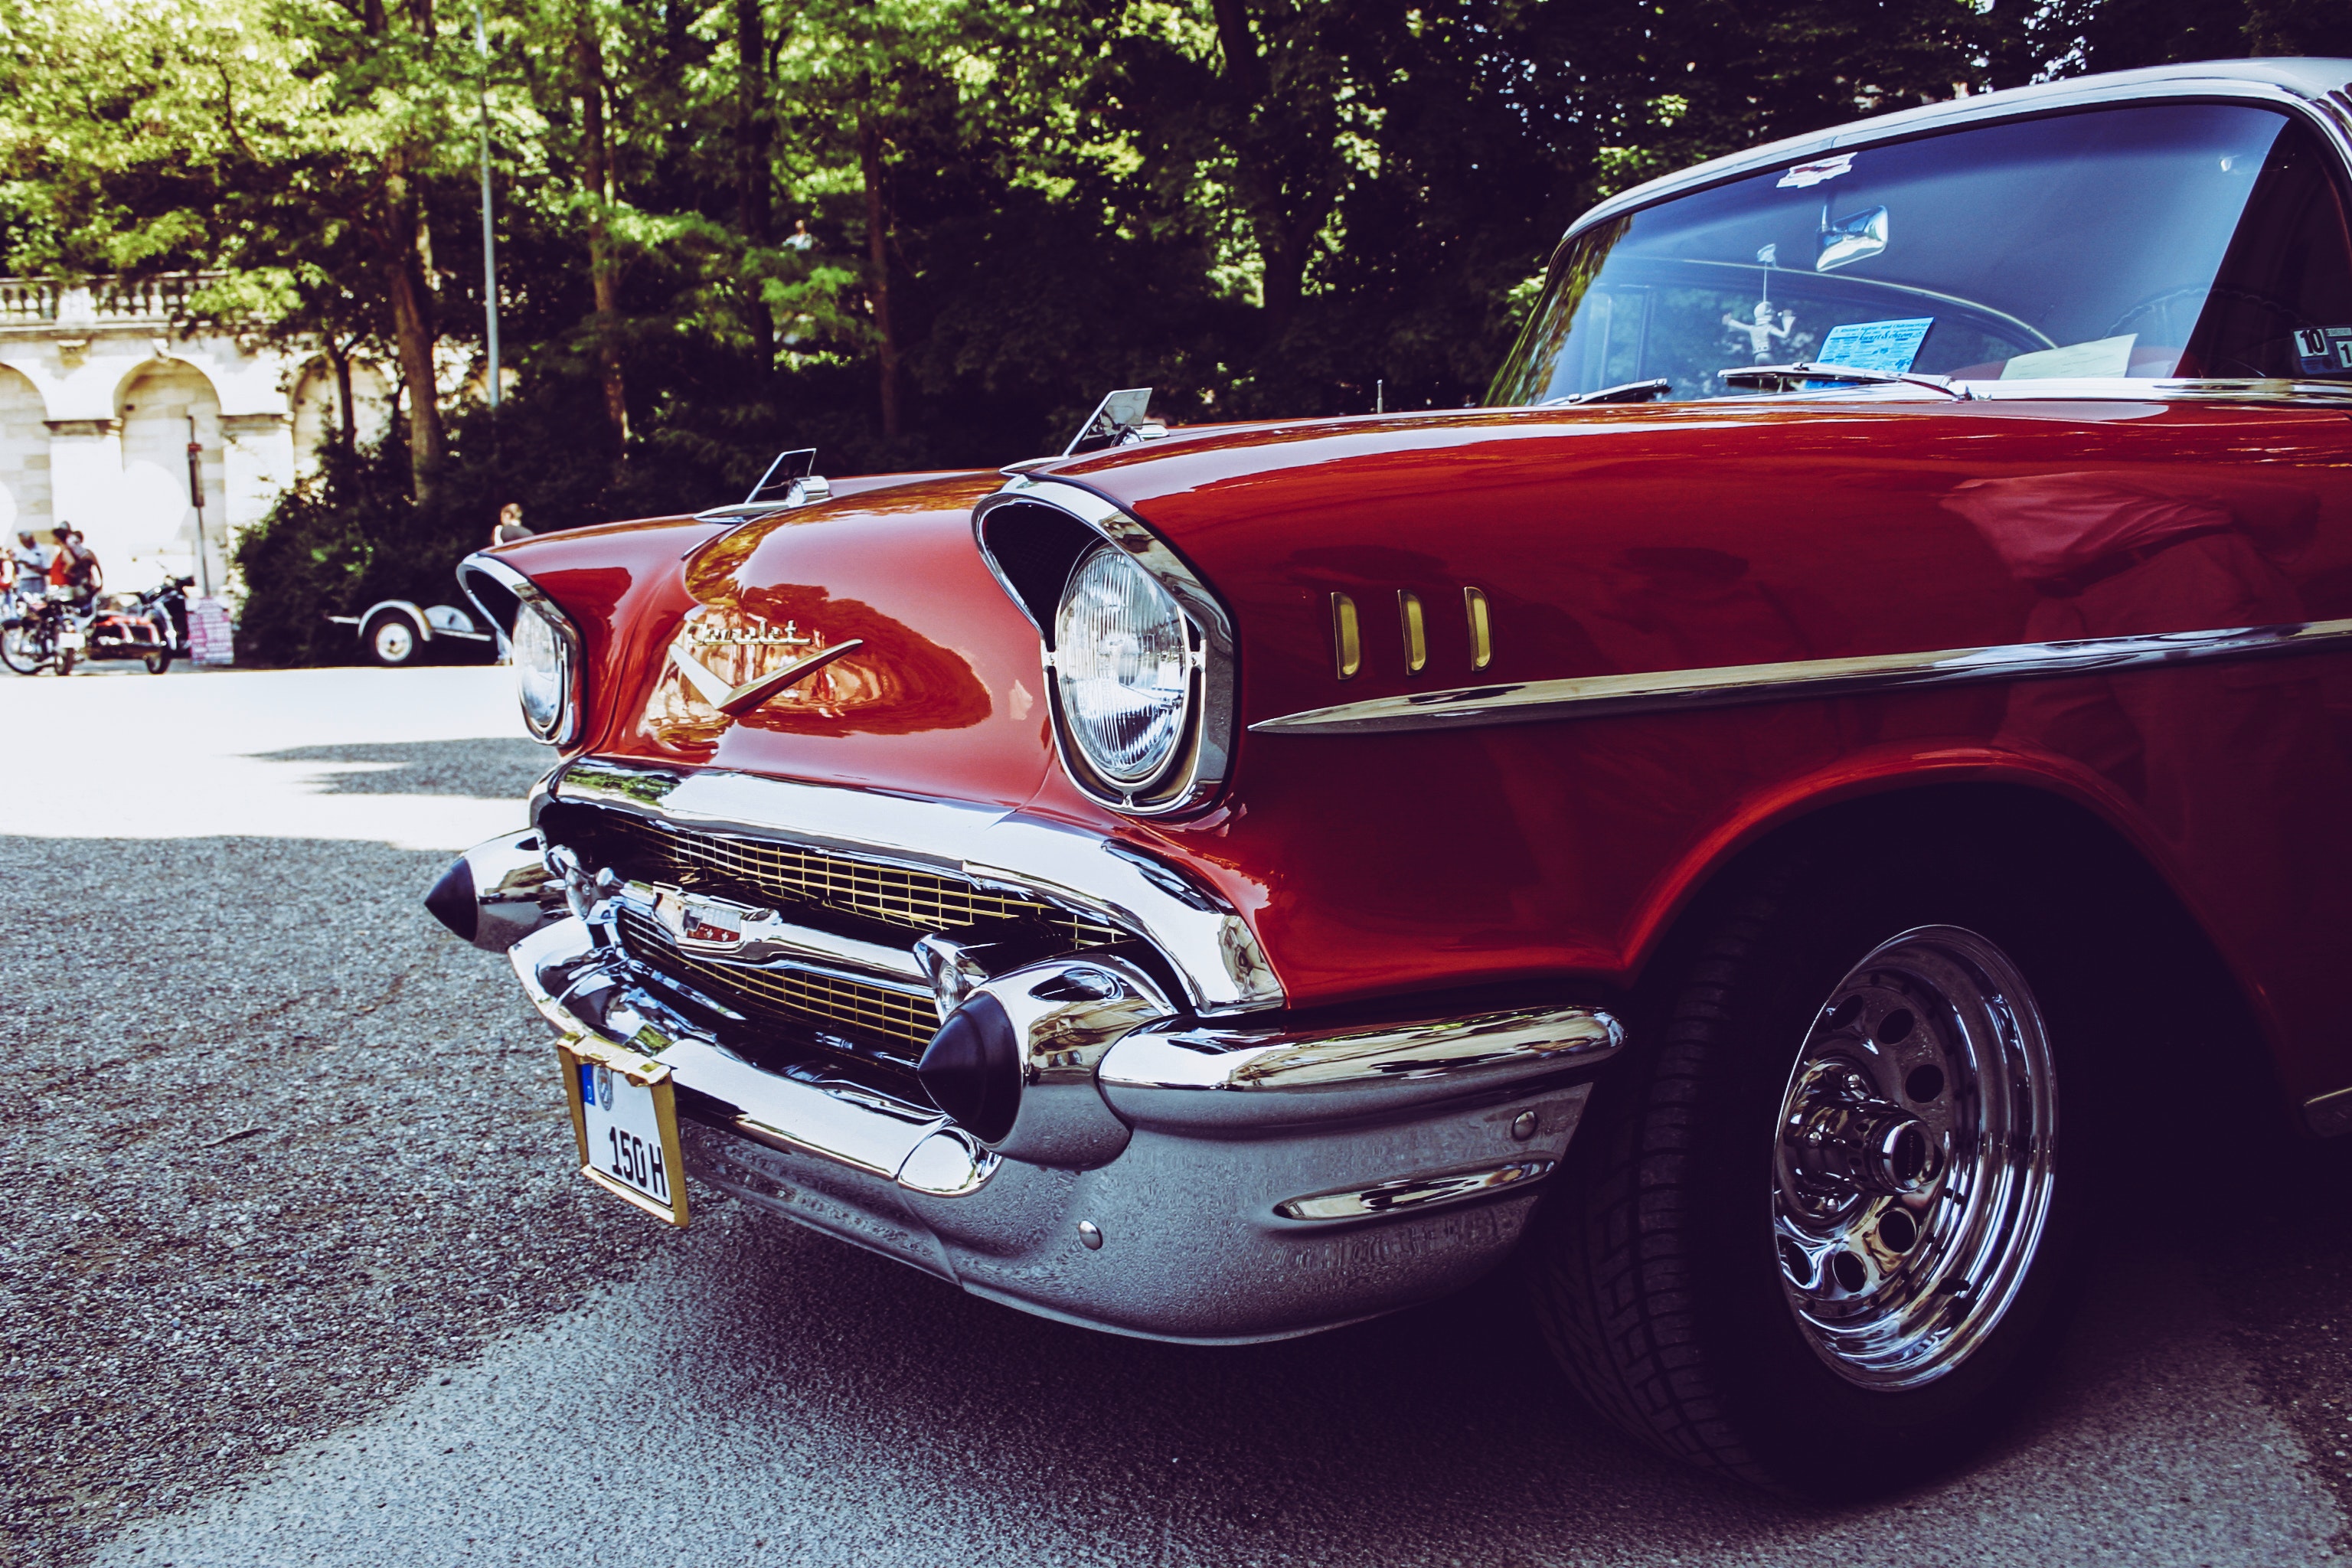 1000+ Amazing Classic Car Photos · Pexels · Free Stock Photos